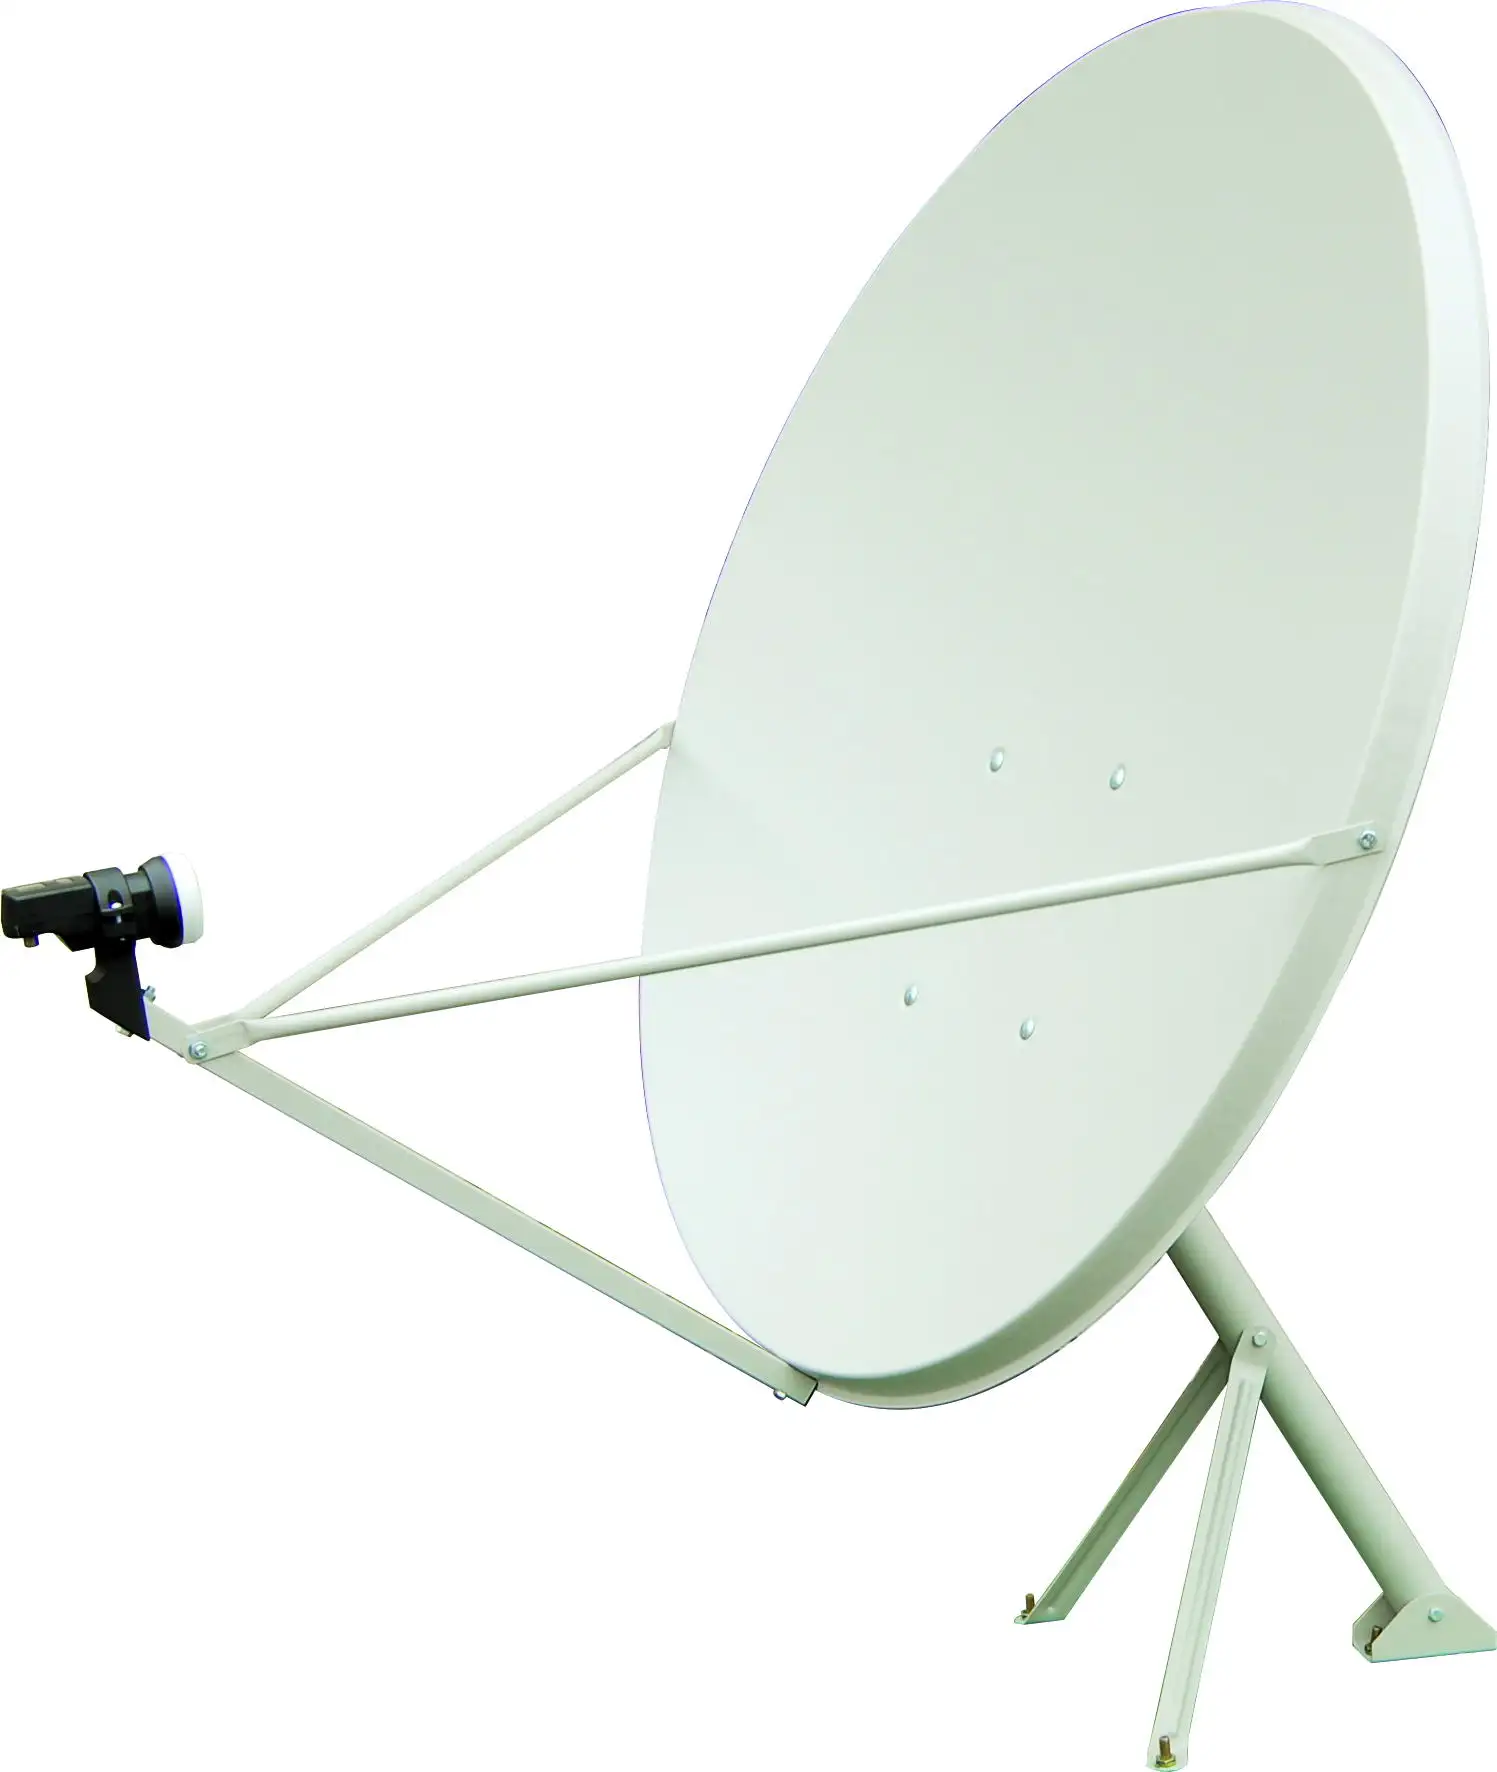 Satellite dish. Антенна SVEC 90см. Антенна Hughes 0.98. Параболическая антенна 50см. Спутниковая тарелка 90 см толщина металла.